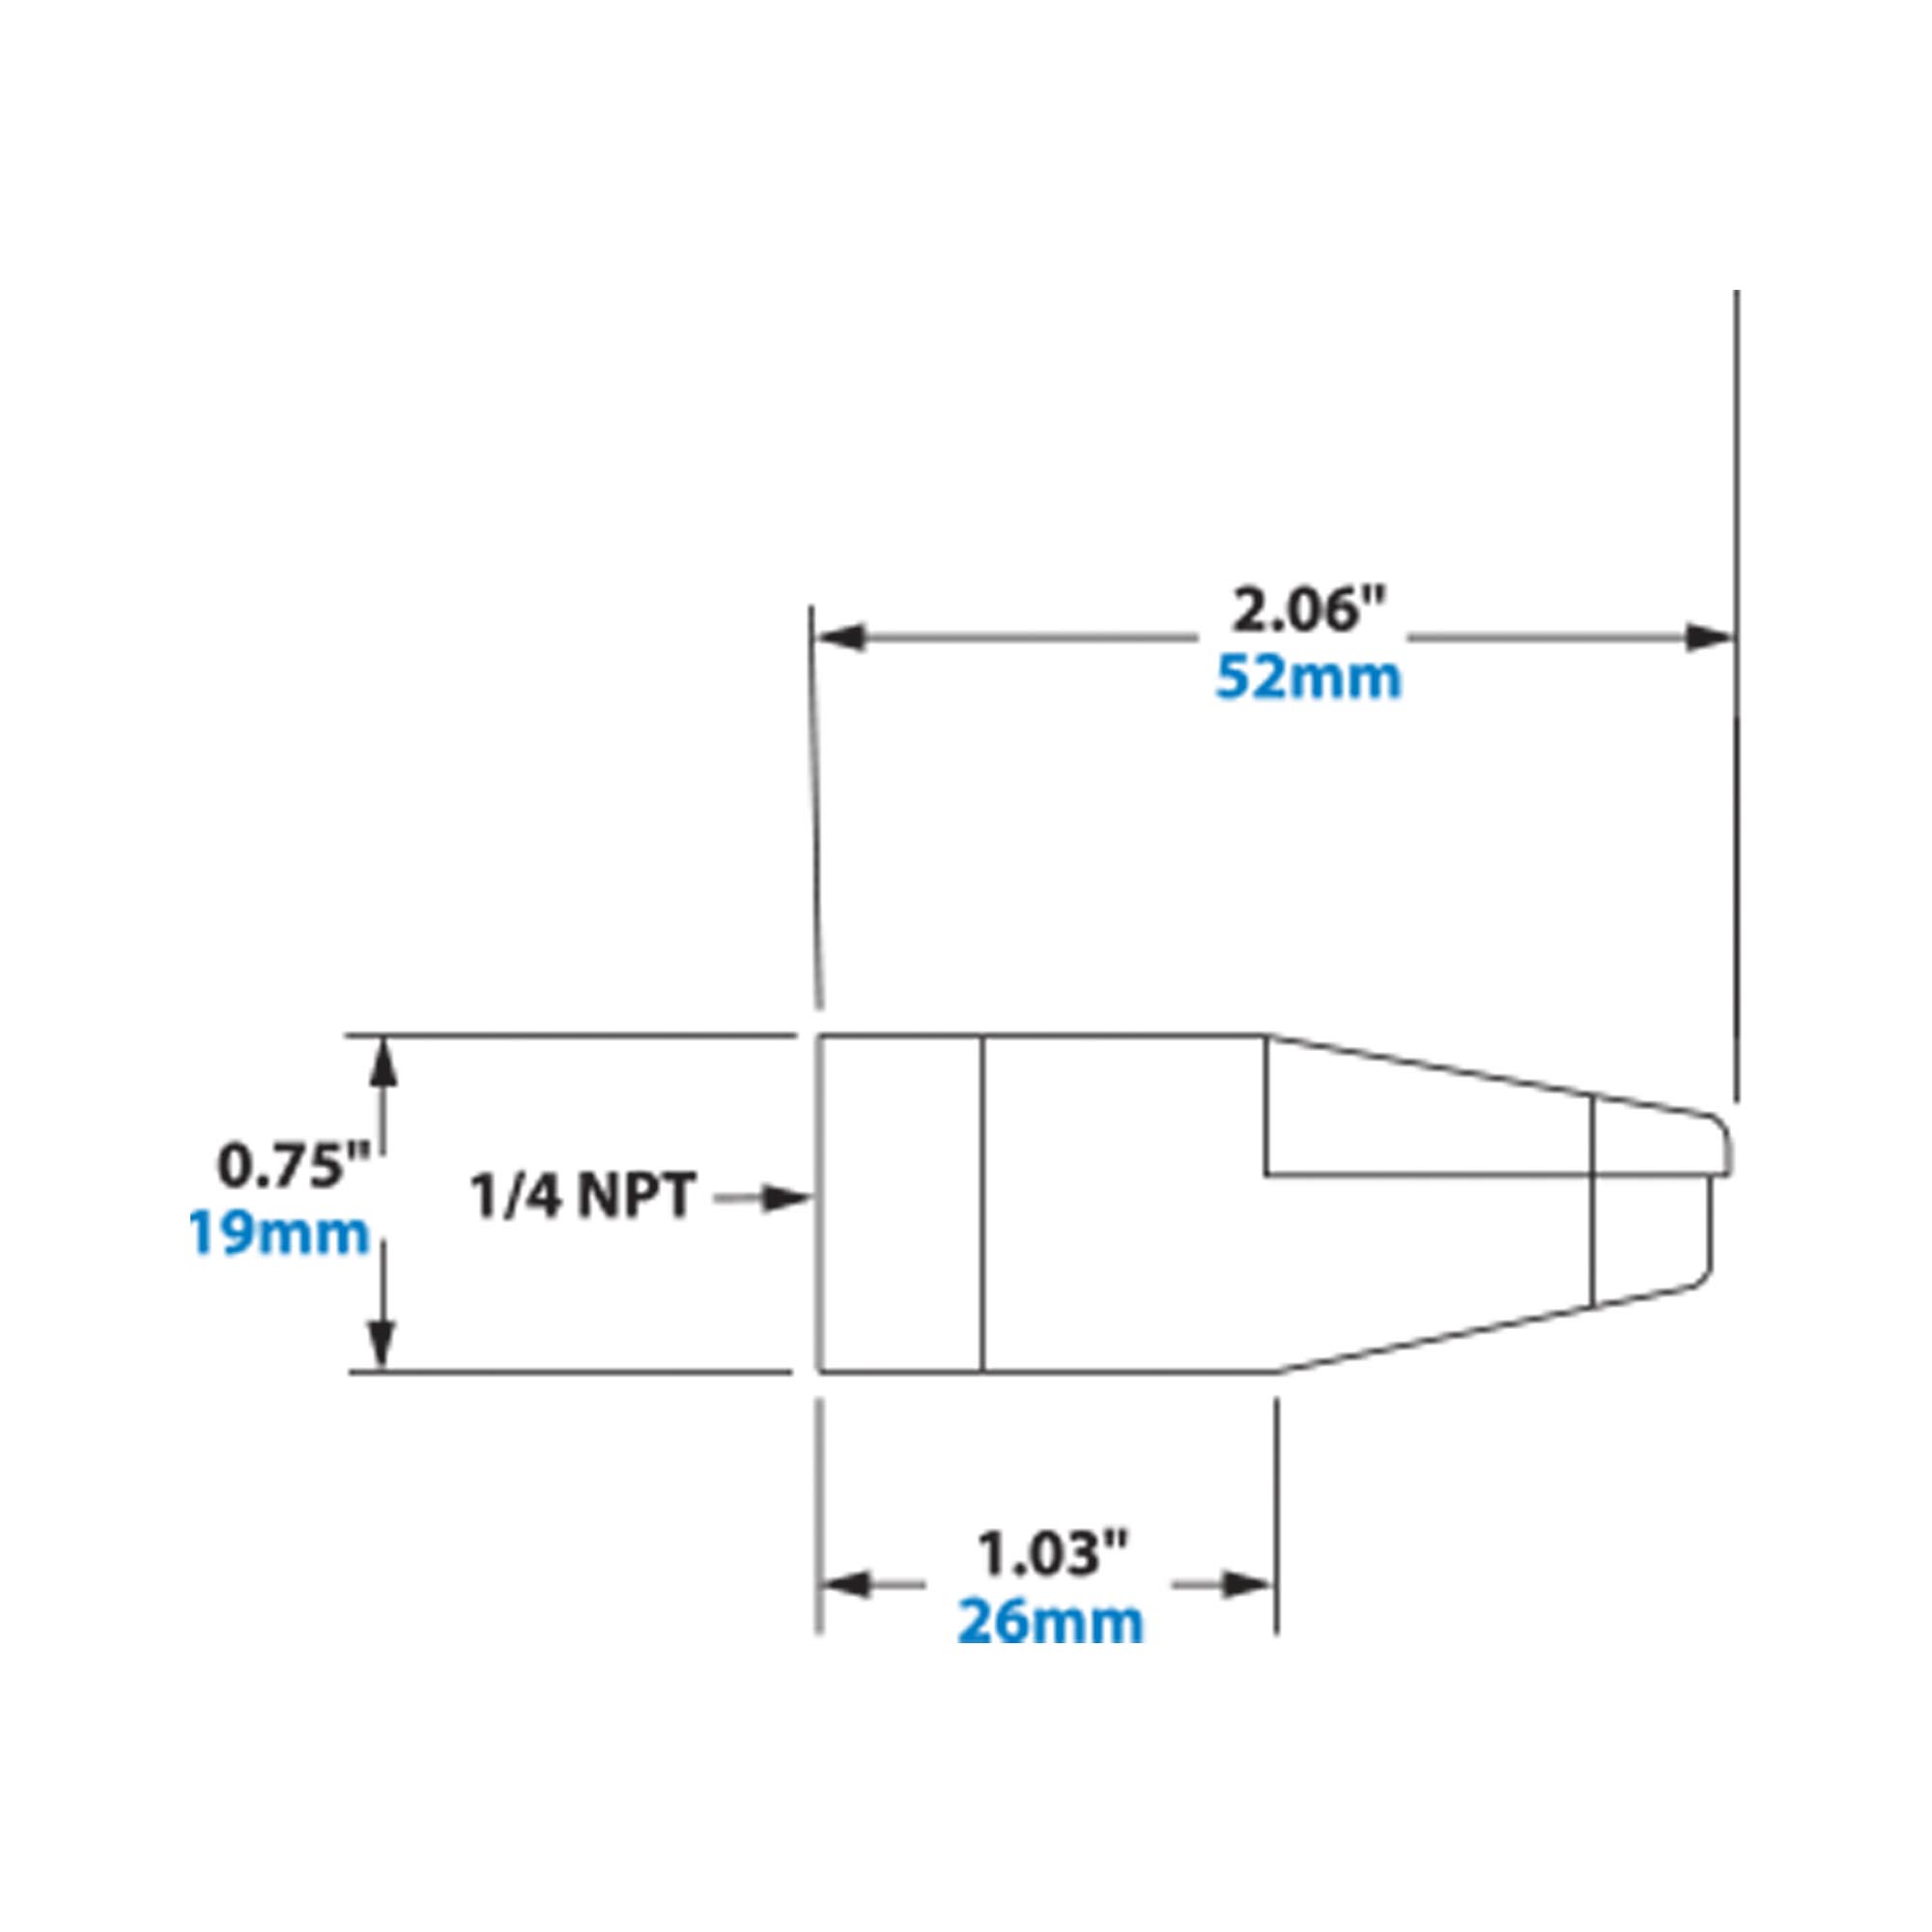 EXAIR 2 Inch Flat Super Air Nozzle Dimensions